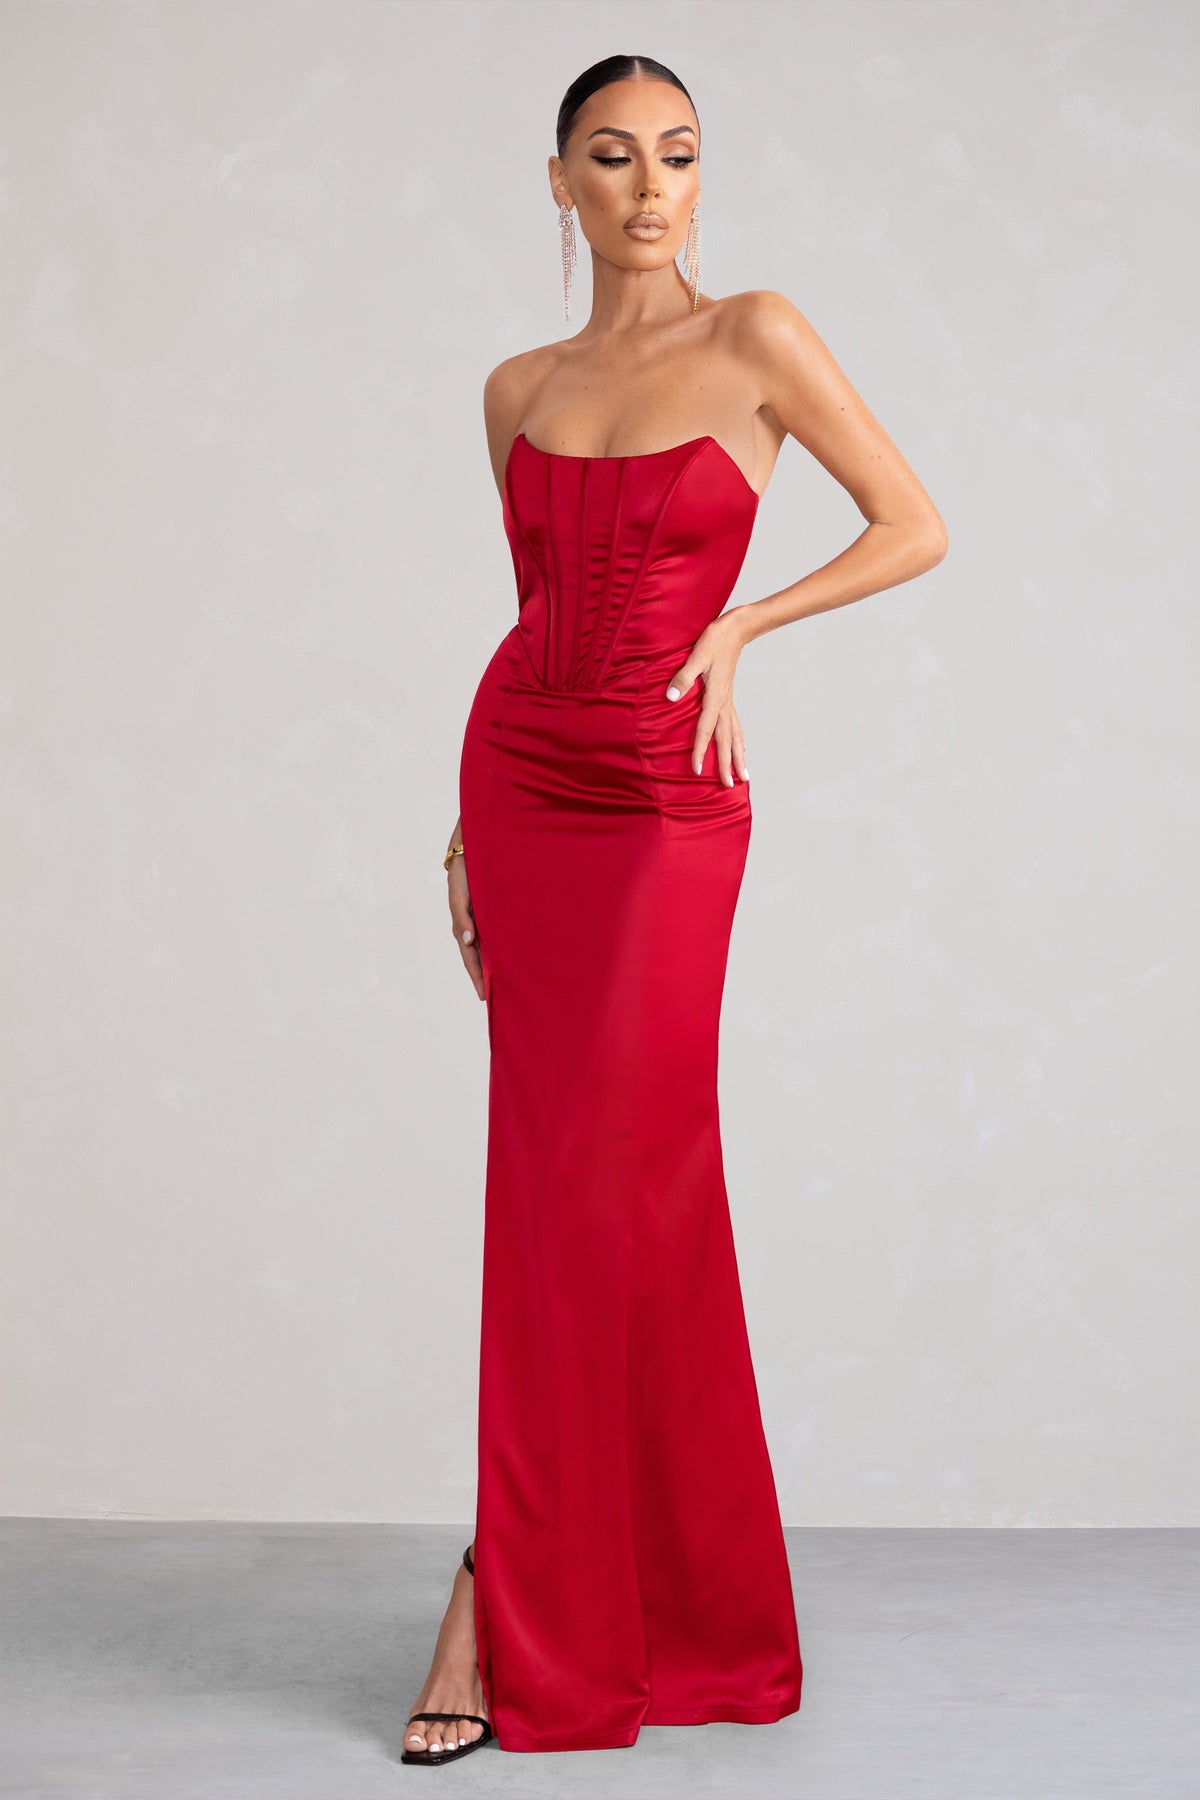 strapless red dress